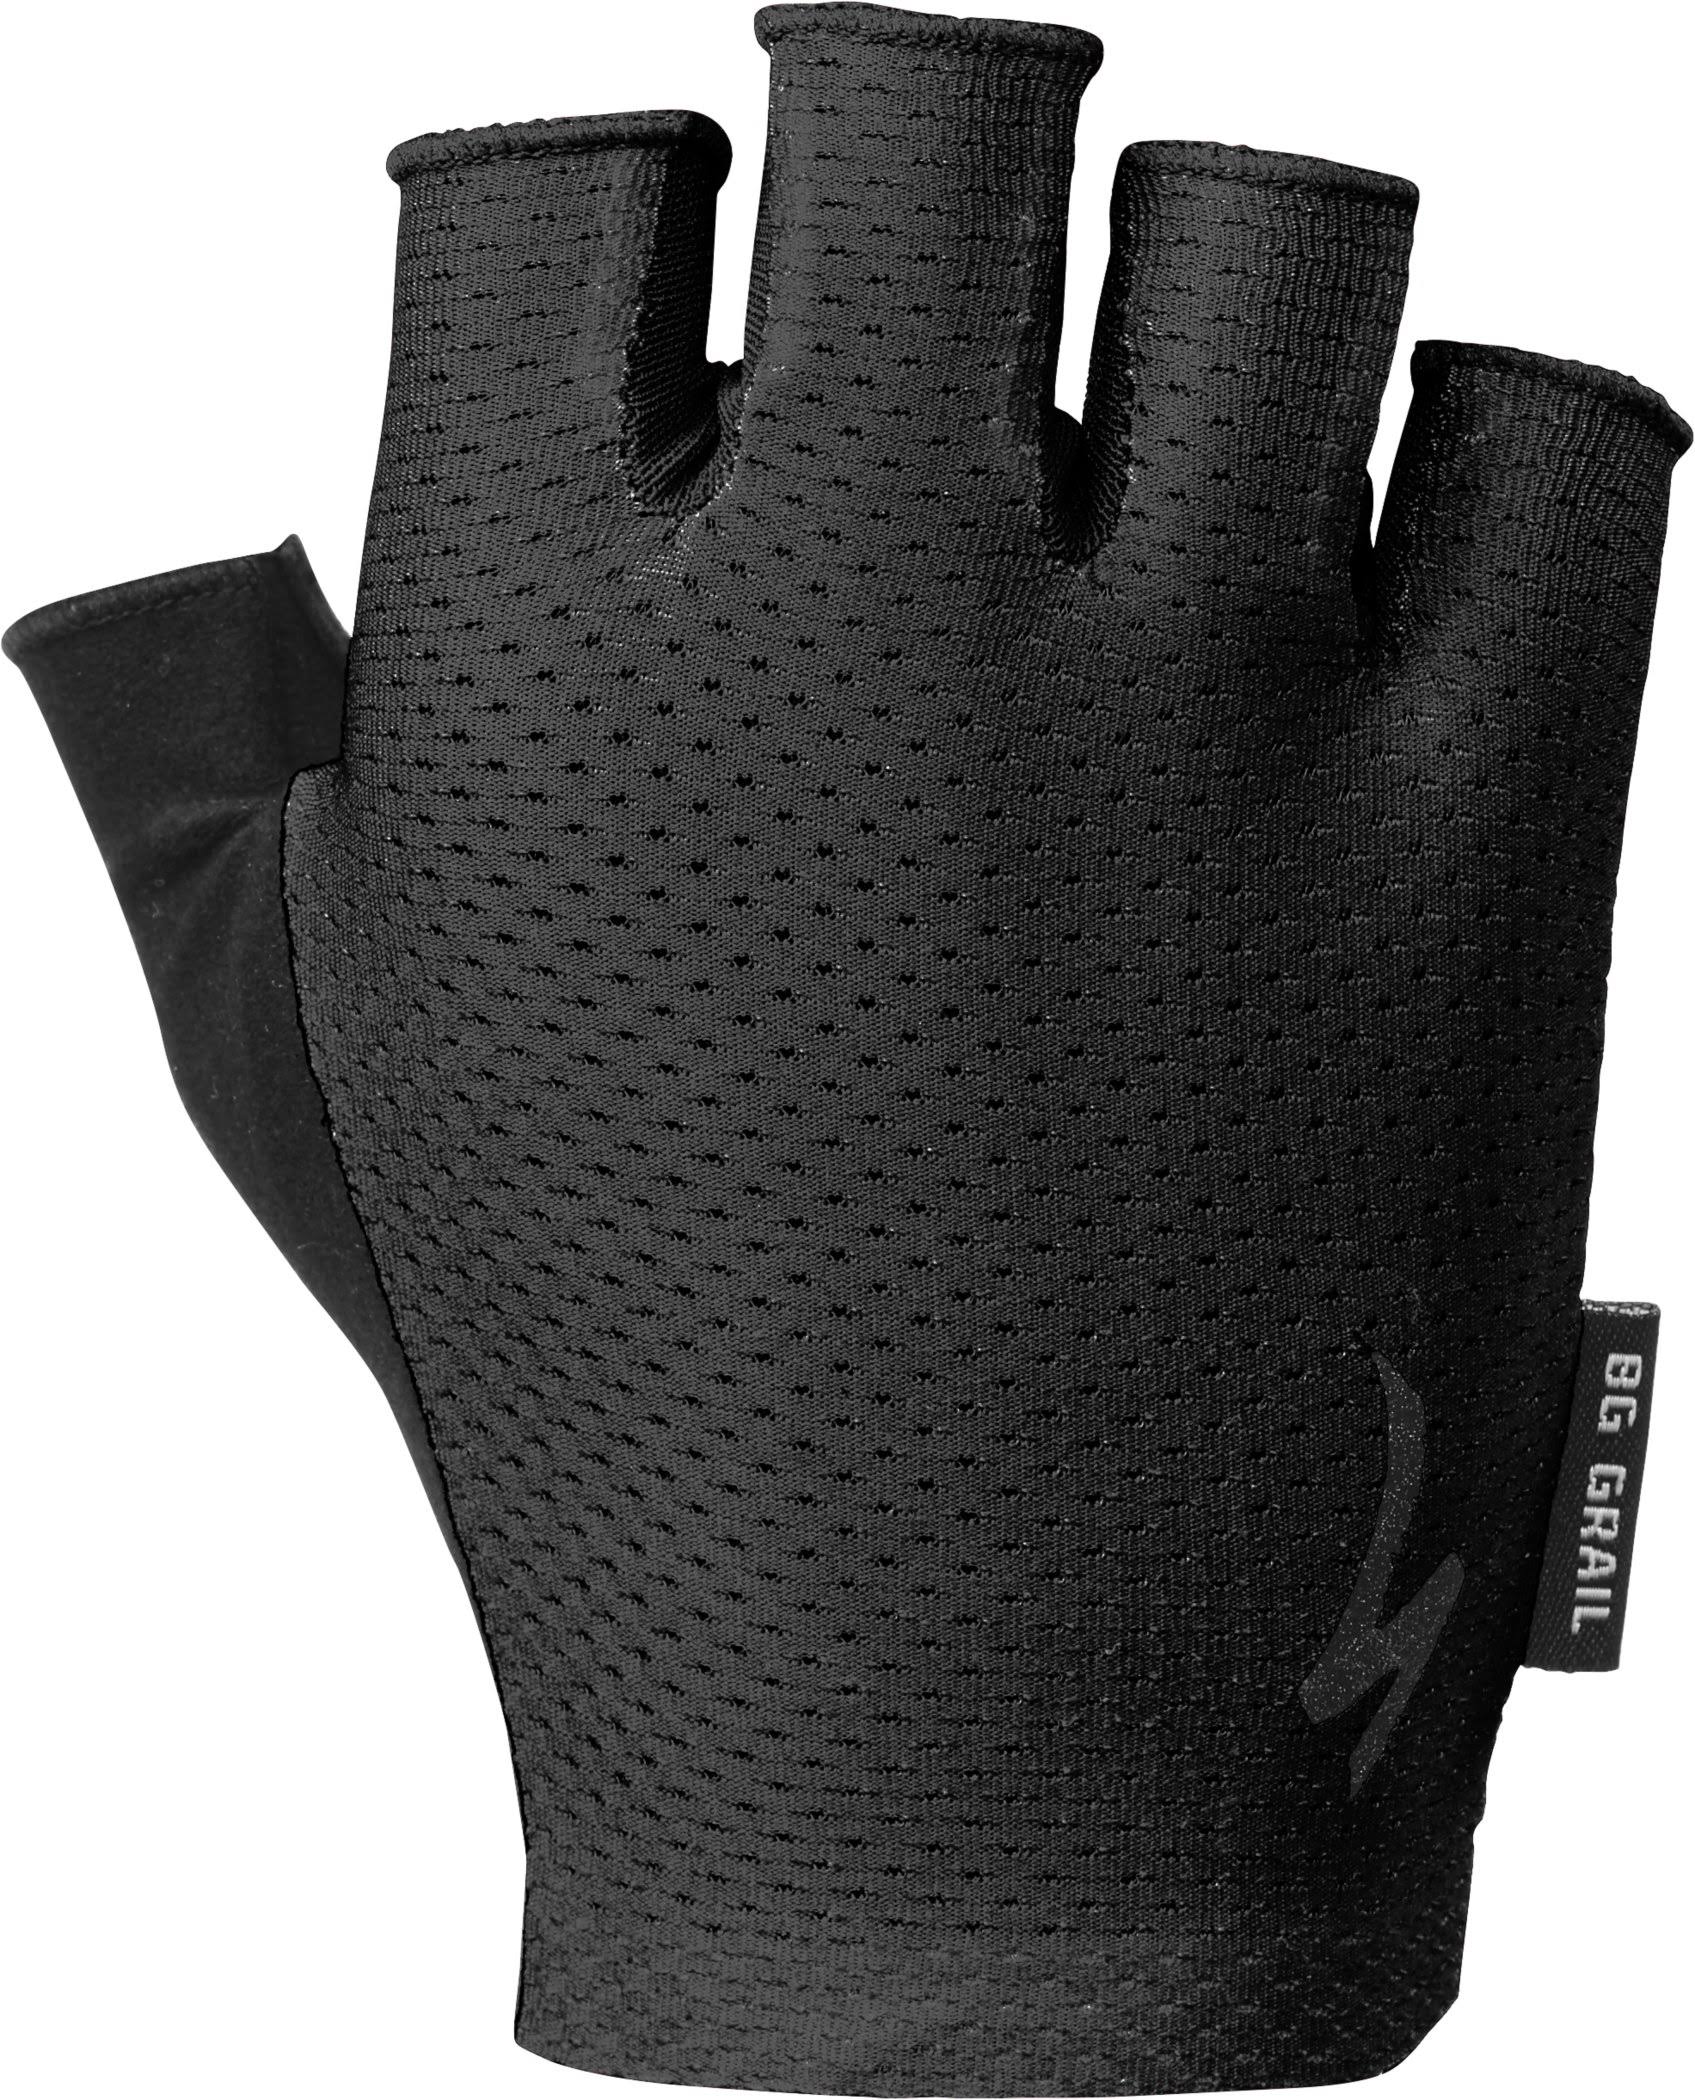 Specialized Women's Body Geometry Grail Gloves - Medium